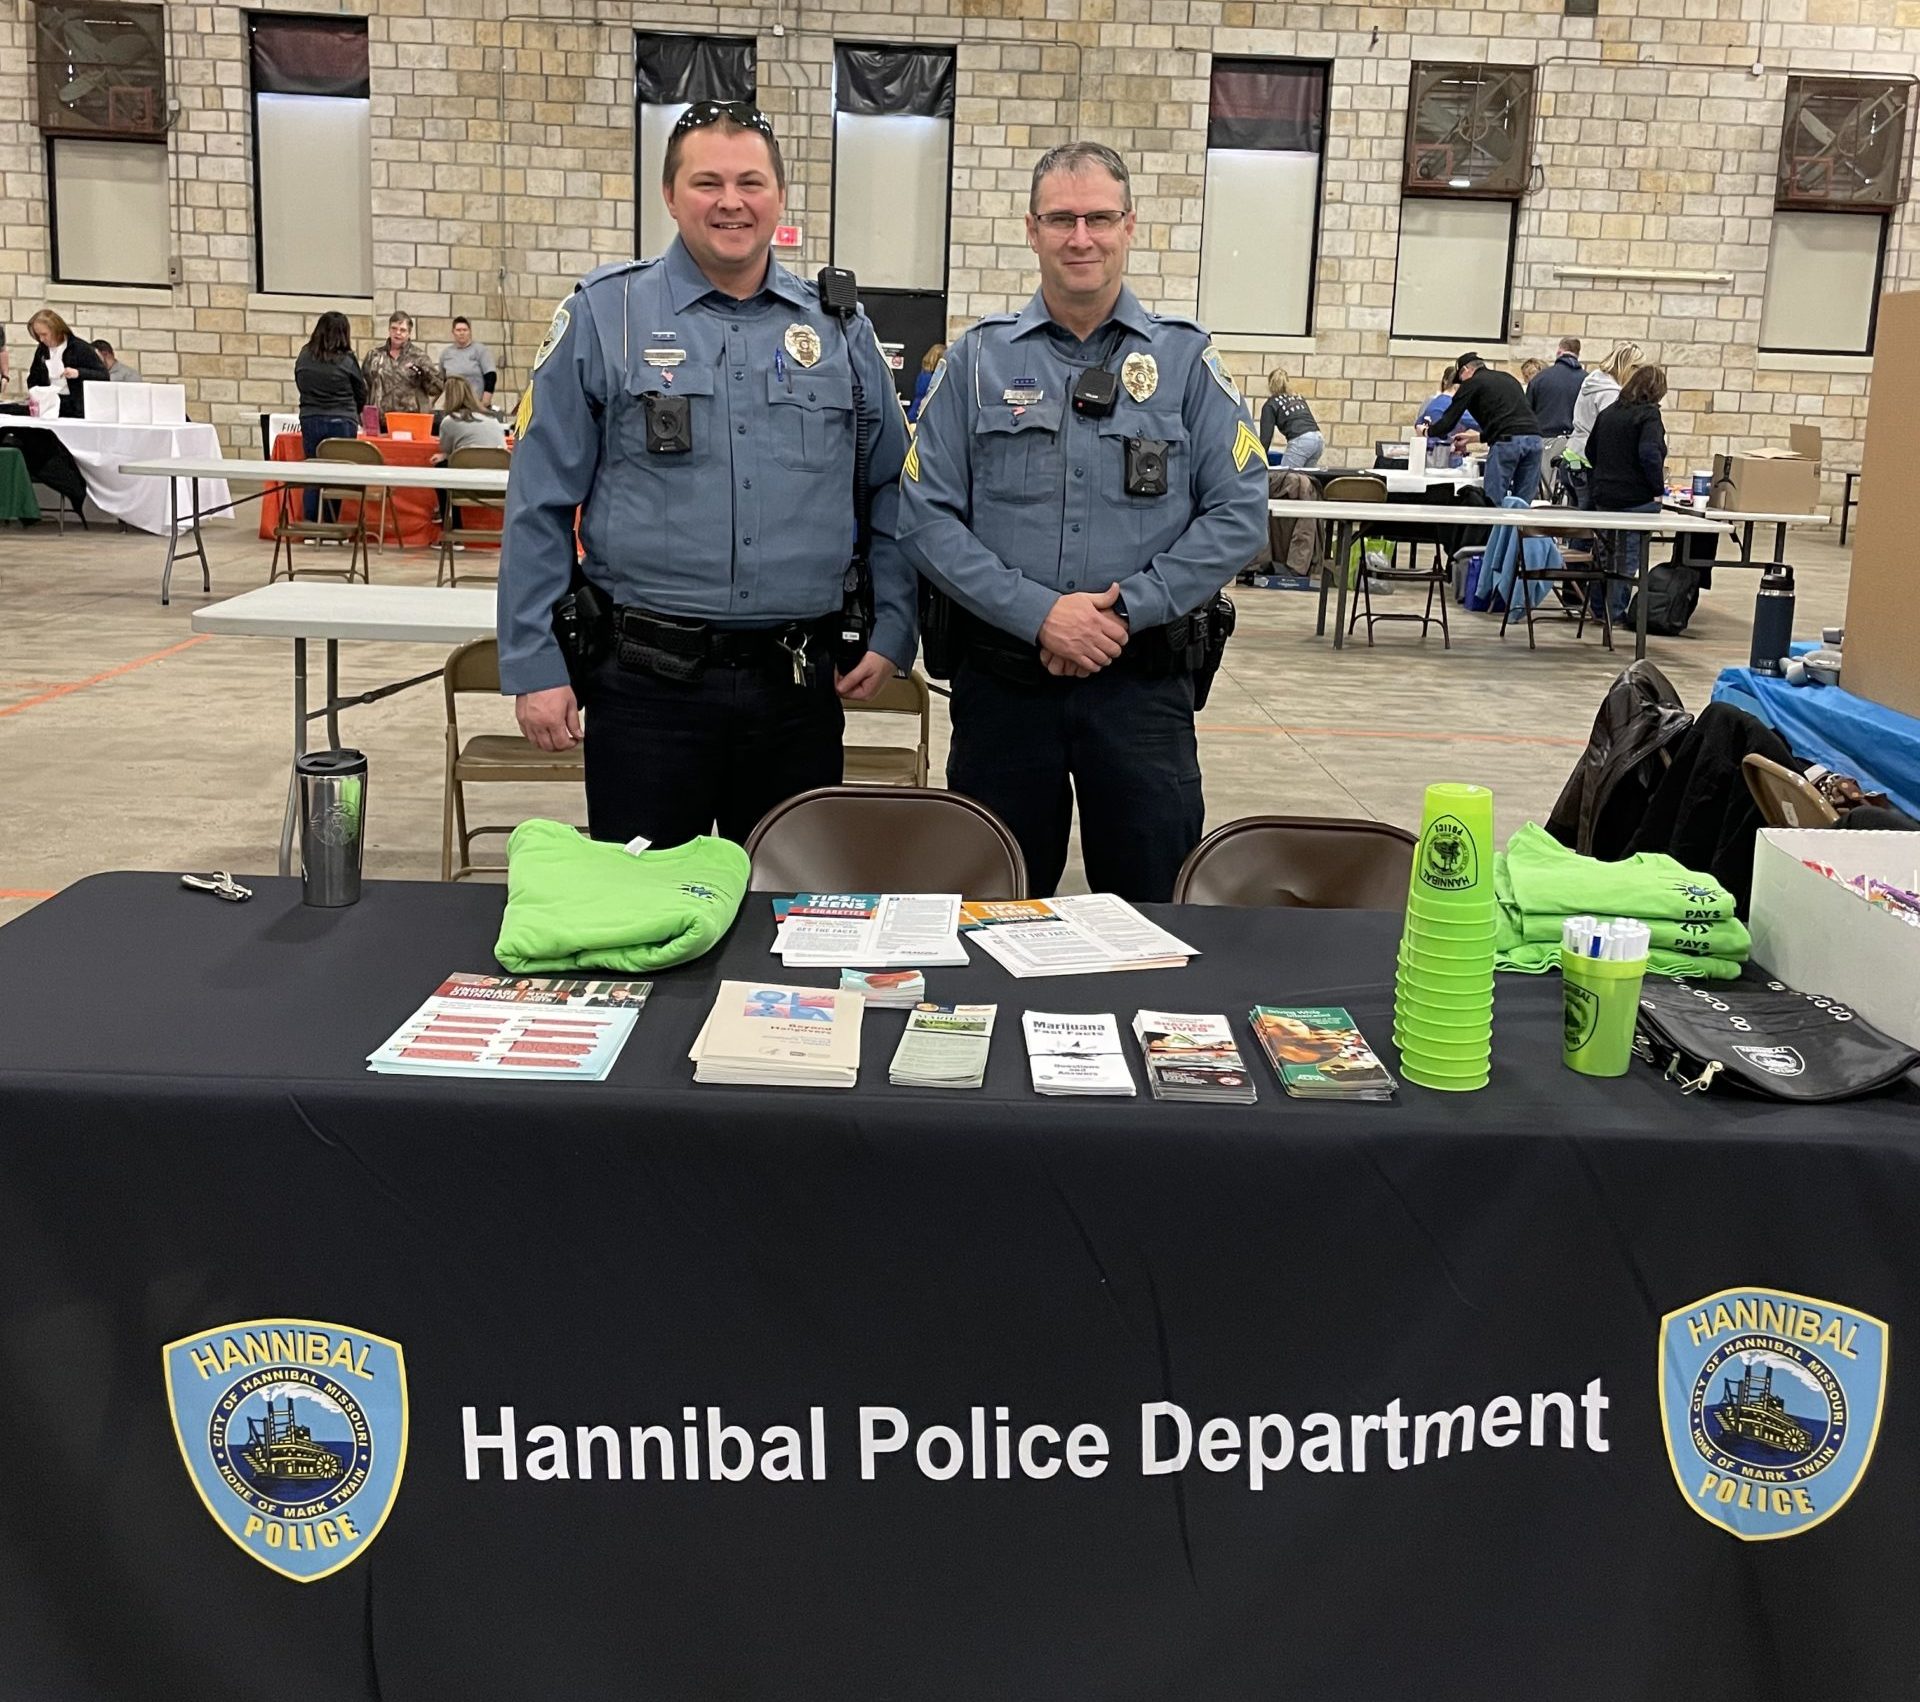 Hannibal Police Department at Chart Teen Health Fair